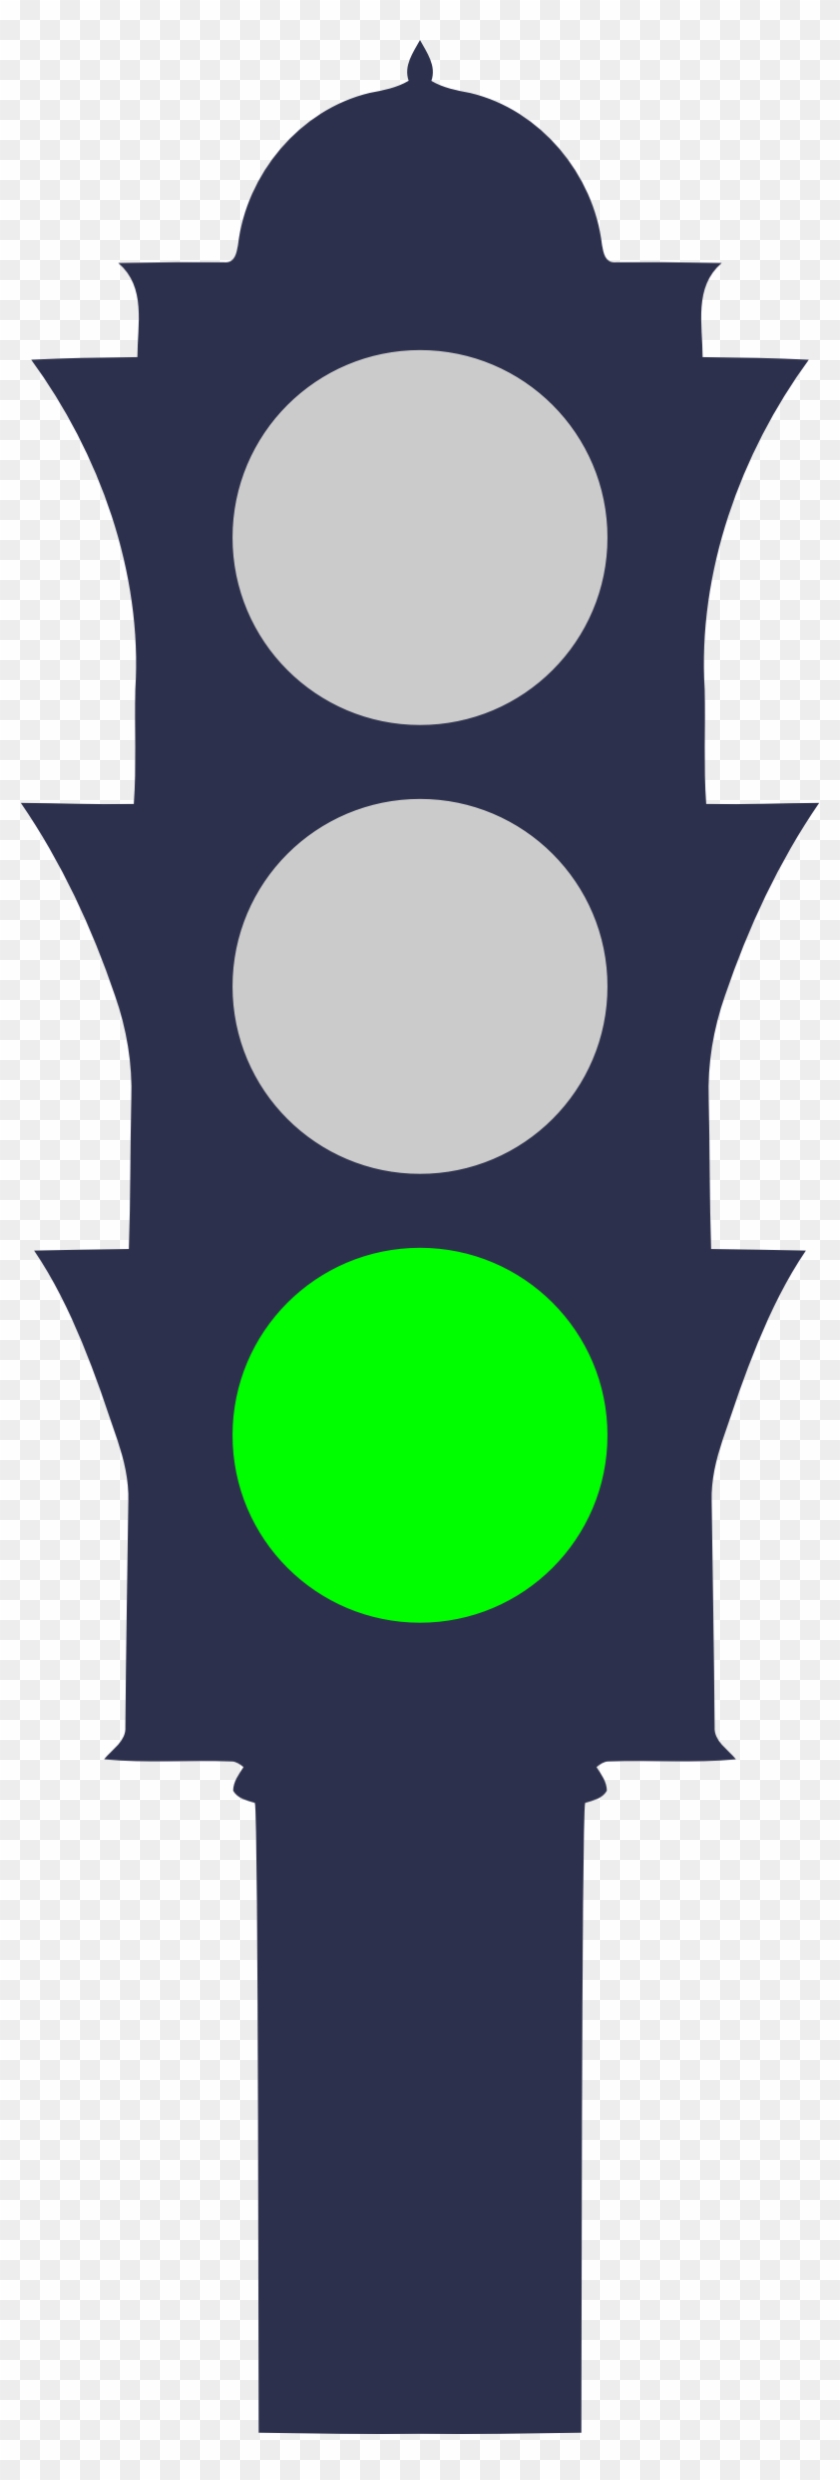 802 X 2400 4 - Green Traffic Light Clip Art - Png Download #798103